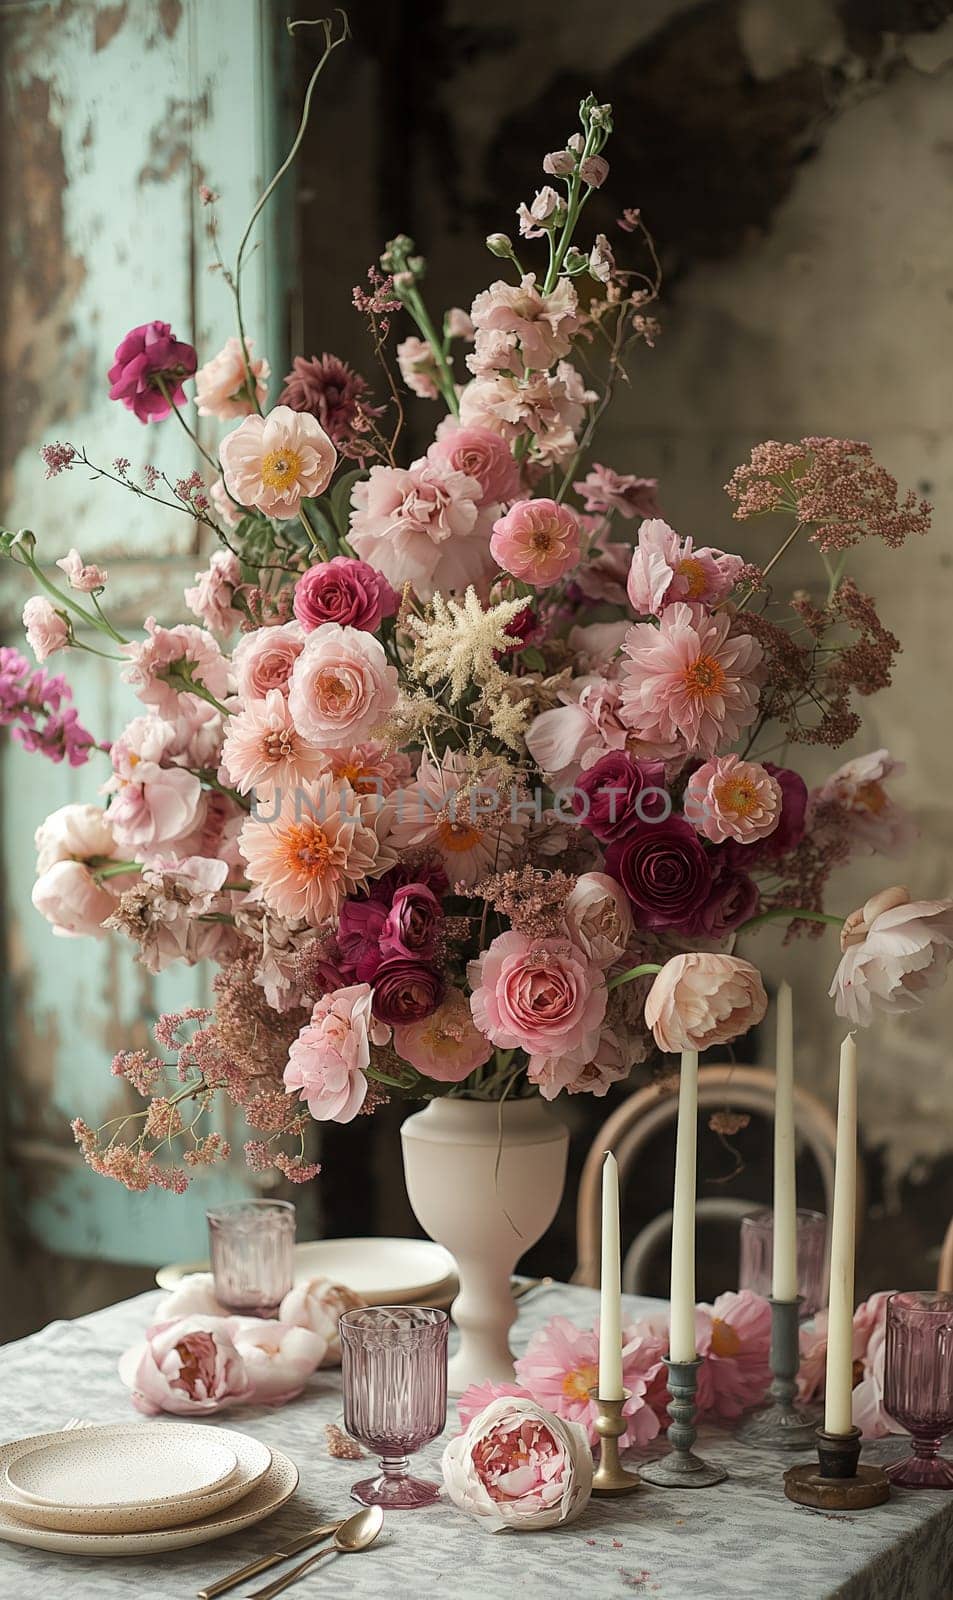 Floral arrangement of various flowers on the festive table. Selective focus